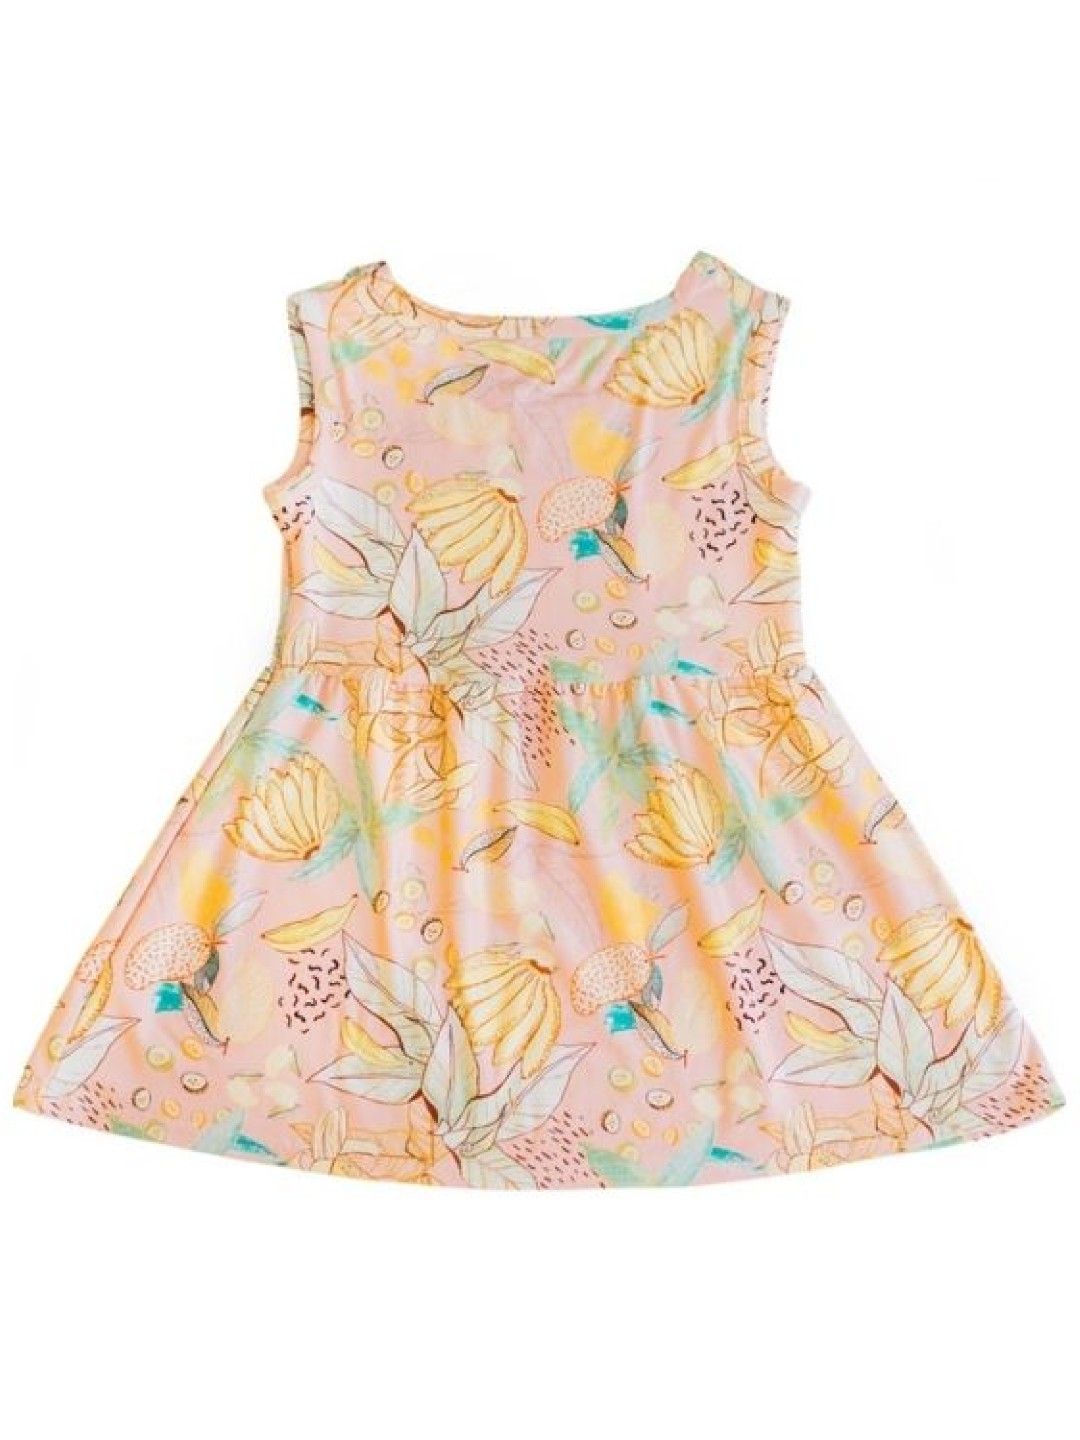 bean fashion Alessa Lanot Saging Swirl Play Sleeveless Dress (No Color- Image 2)